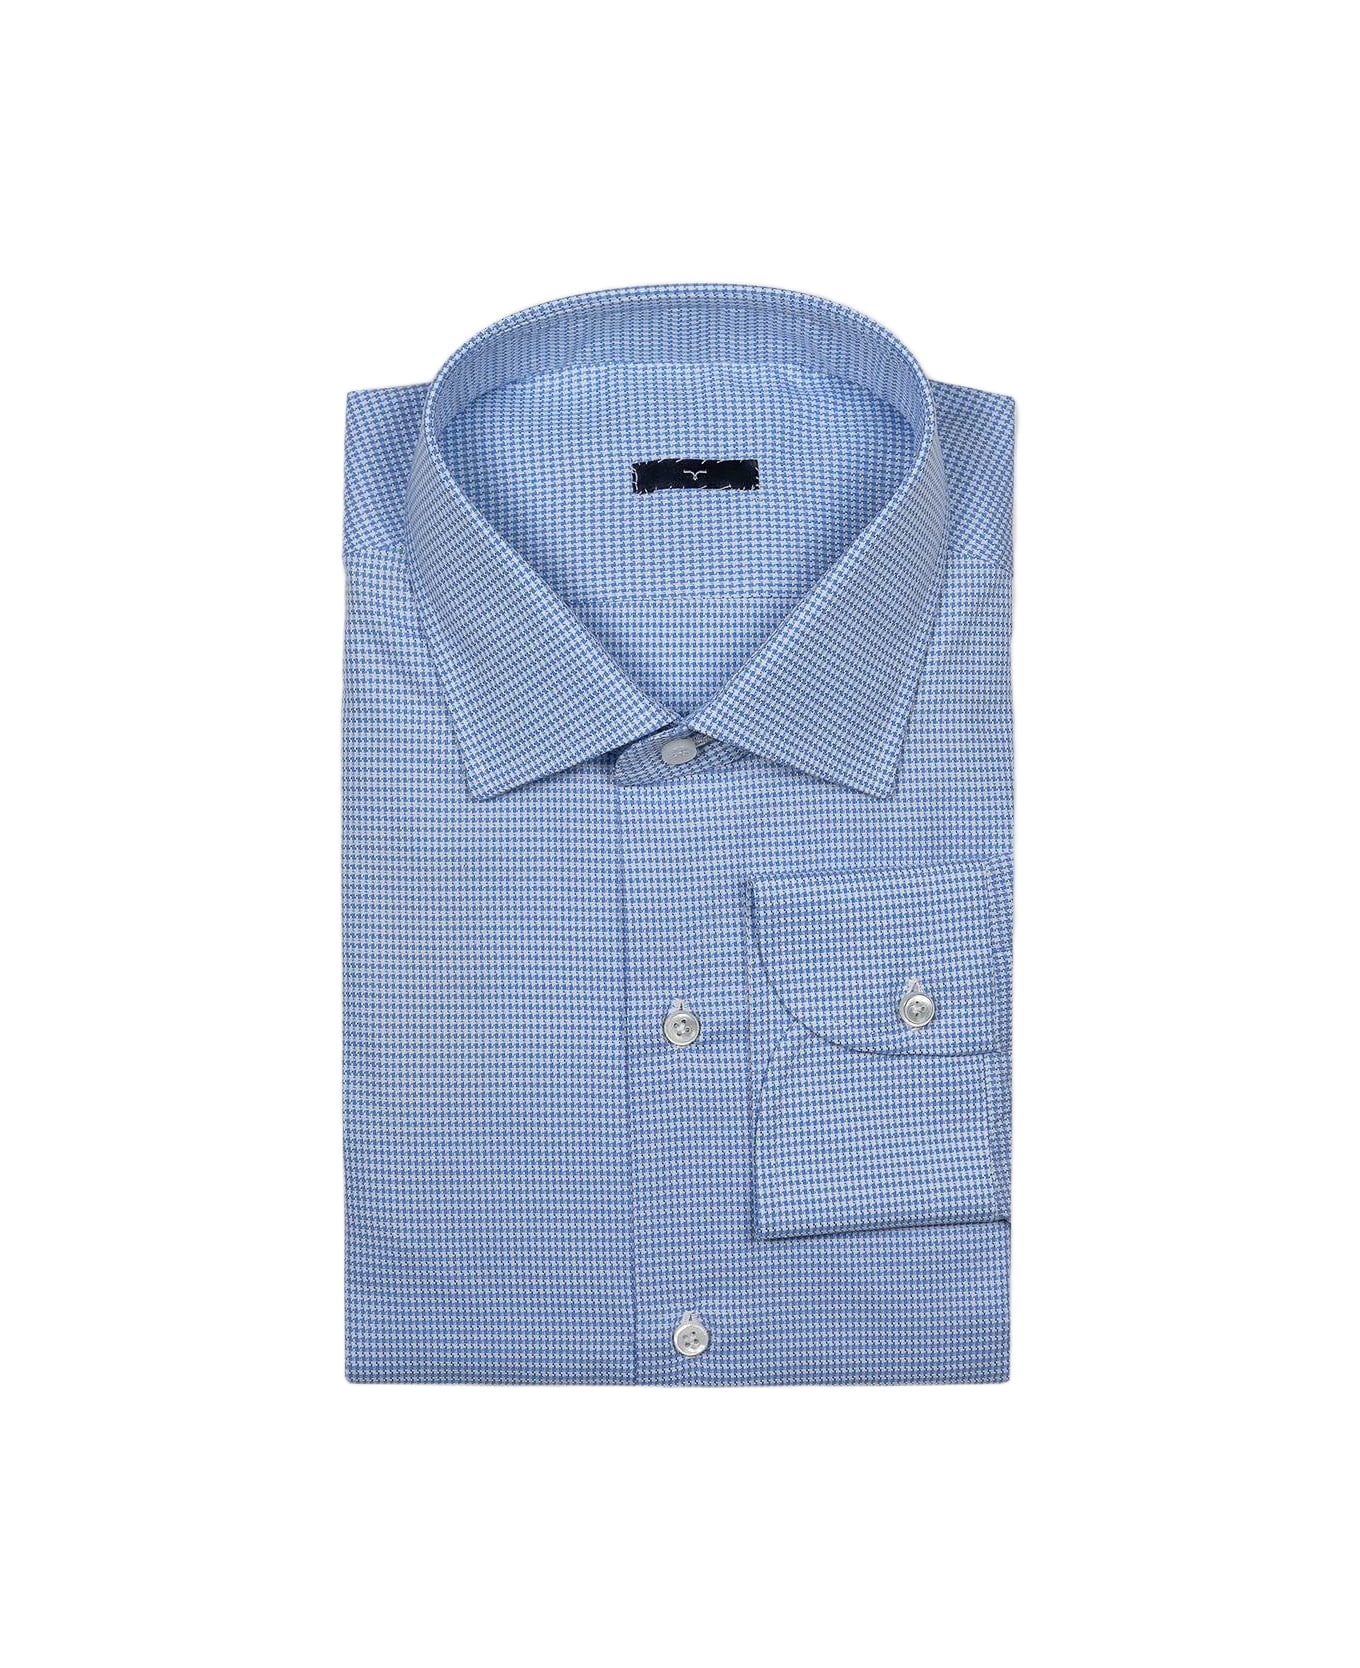 Larusmiani Handmade Shirt 'mayfair Executive' Shirt - Sky Blue